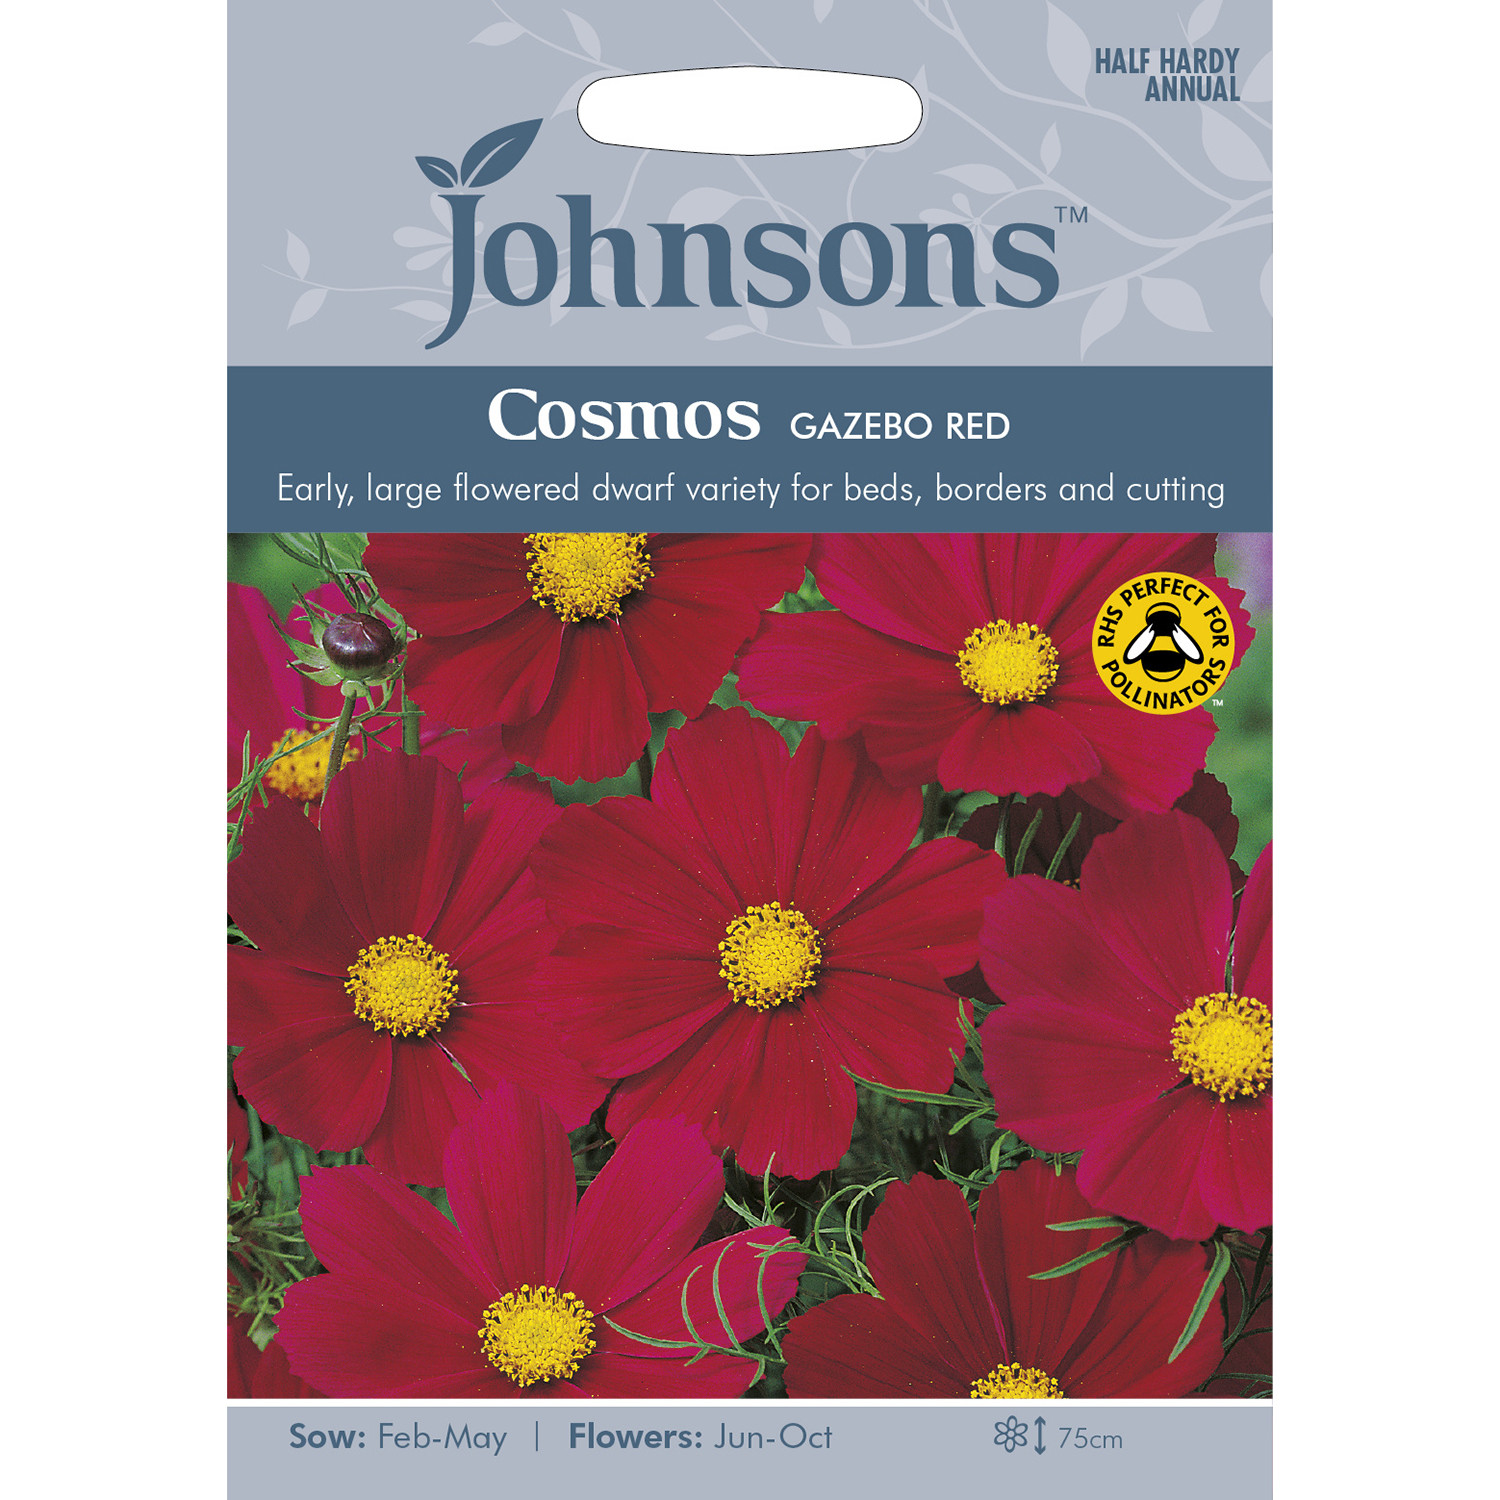 Johnsons Cosmos Gazebo Red Flower Seeds Image 2